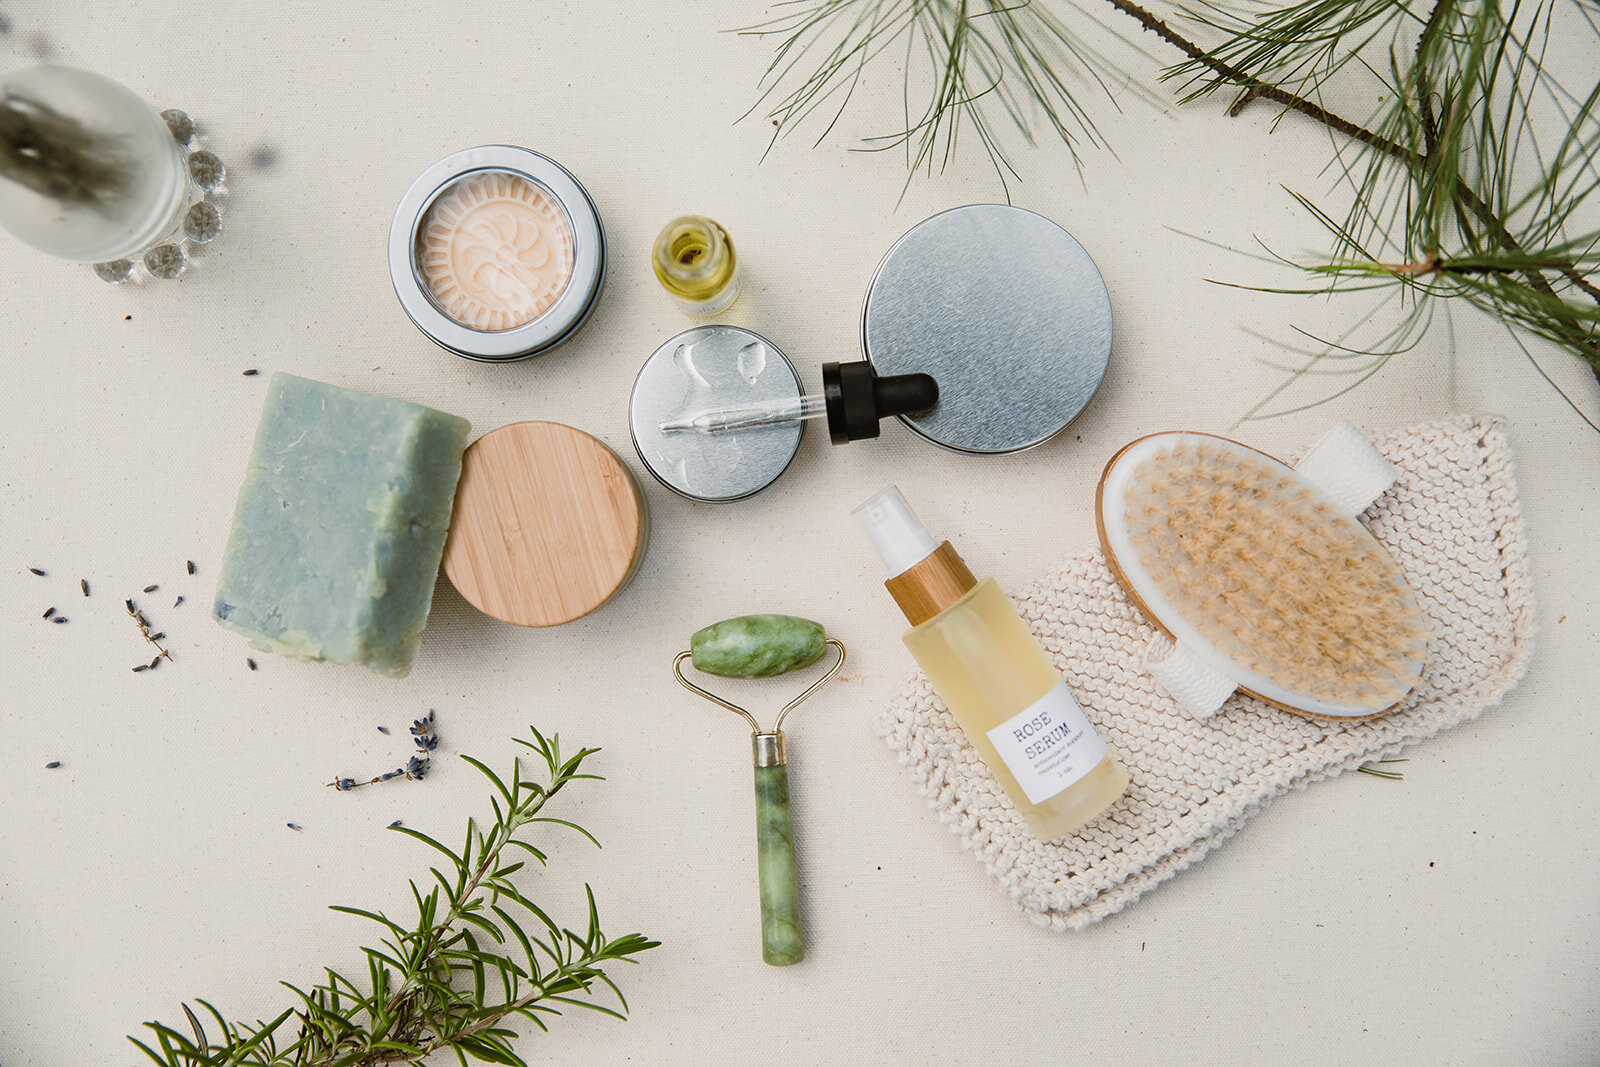  All natural soap and skincare | Be Mindful Skincare | Sarah Mattozzi Photography 